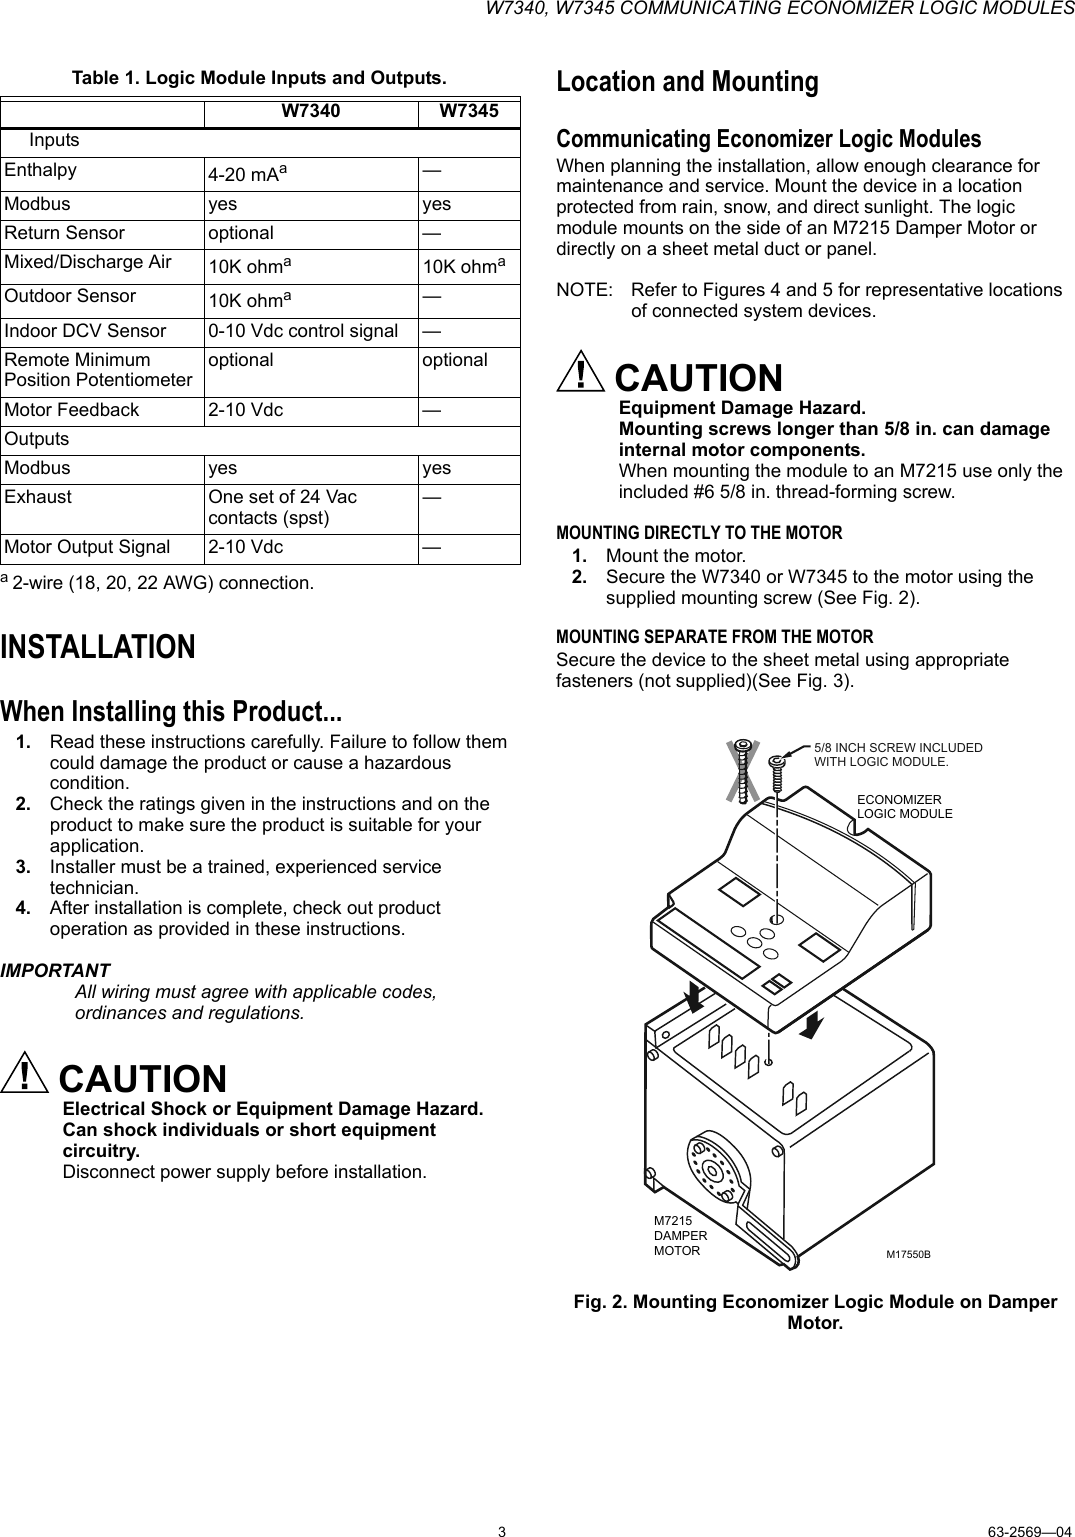 Page 3 of 12 - Honeywell Honeywell-W7340-Users-Manual- 63-2569-4 - W7340, W7345 Communicating Economizer Logic Modules  Honeywell-w7340-users-manual